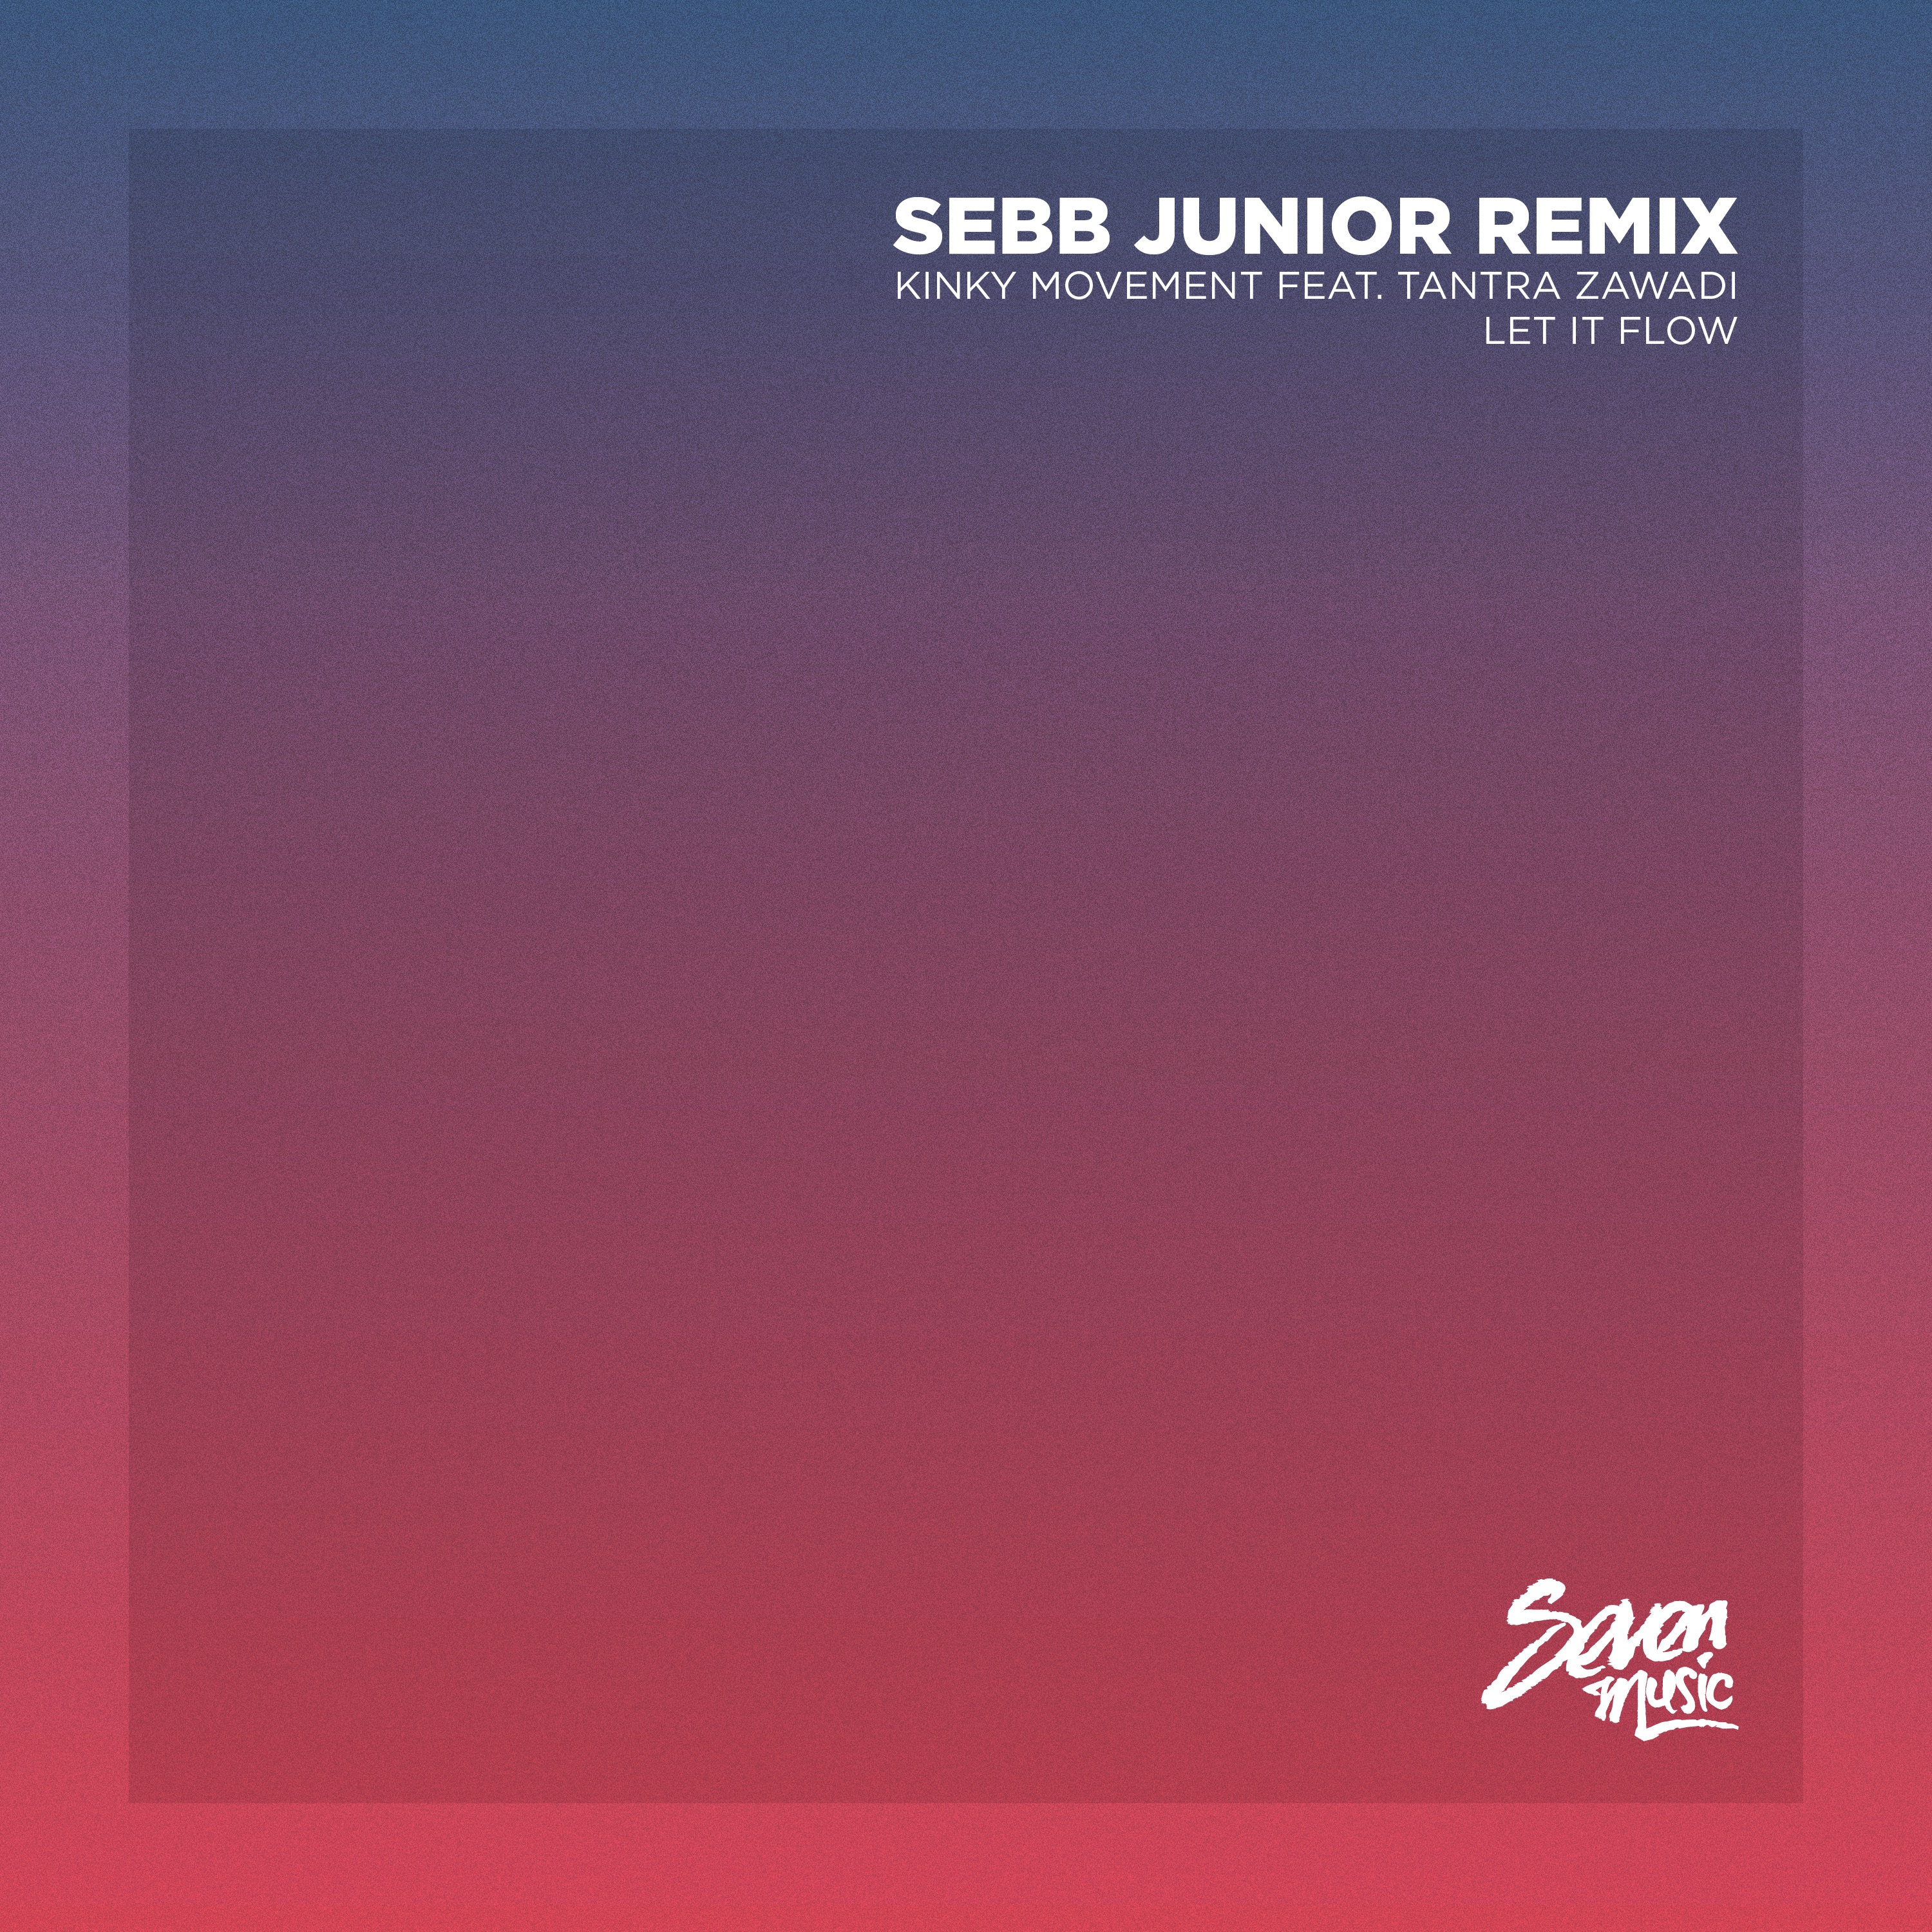 Sii mai Premiere: Kinky Movement - Let It Flow (Sebb Junior Remix) - Seven Music